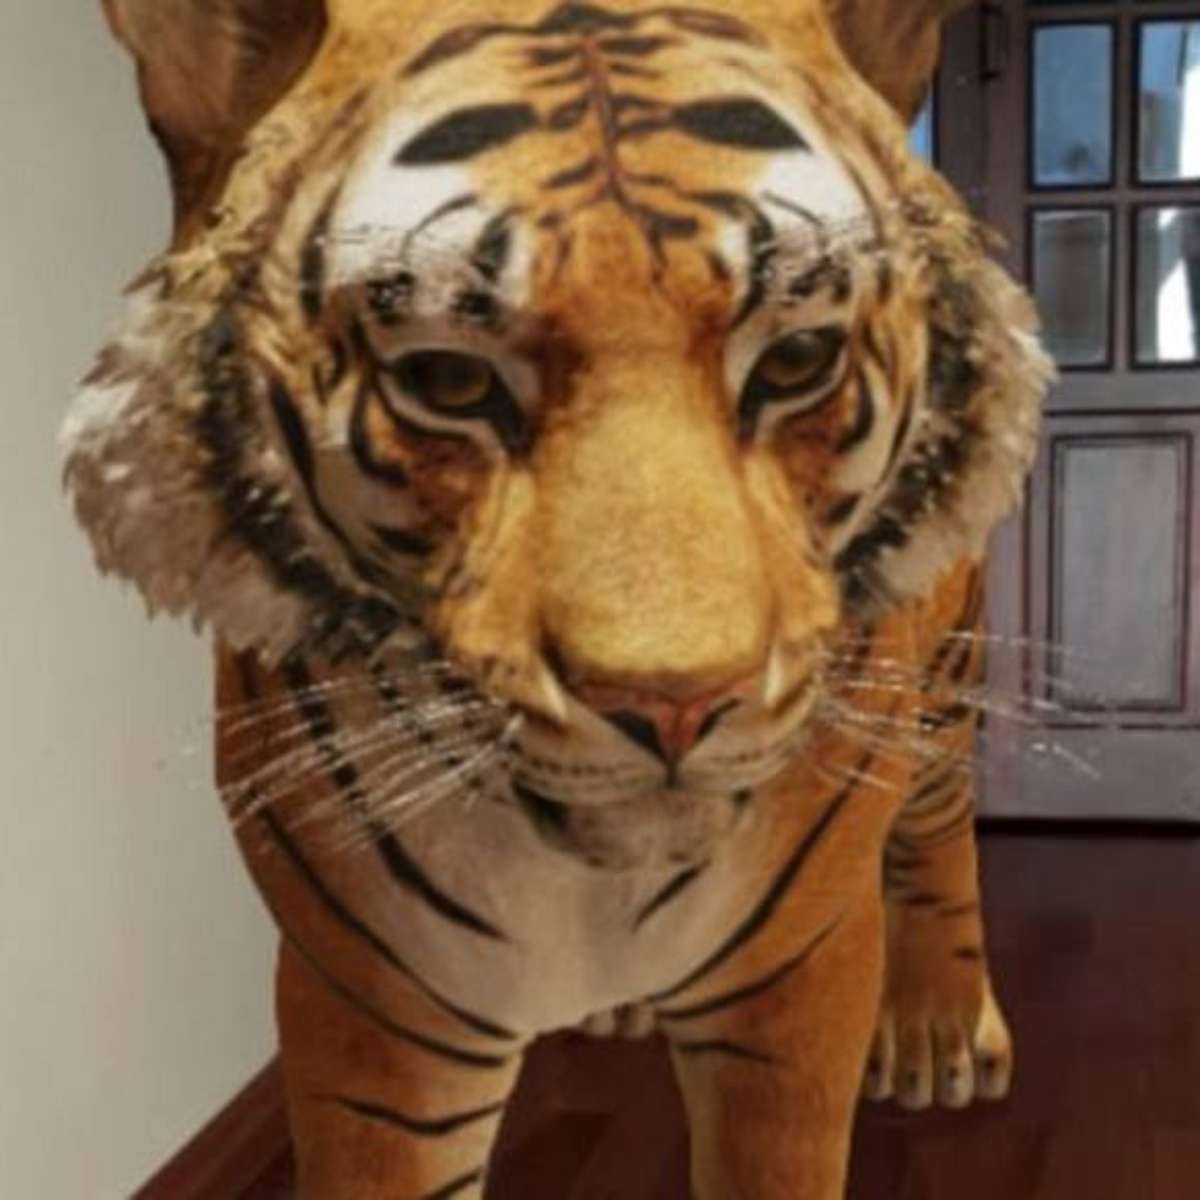 Animals 3D, Google 3D Animals on android